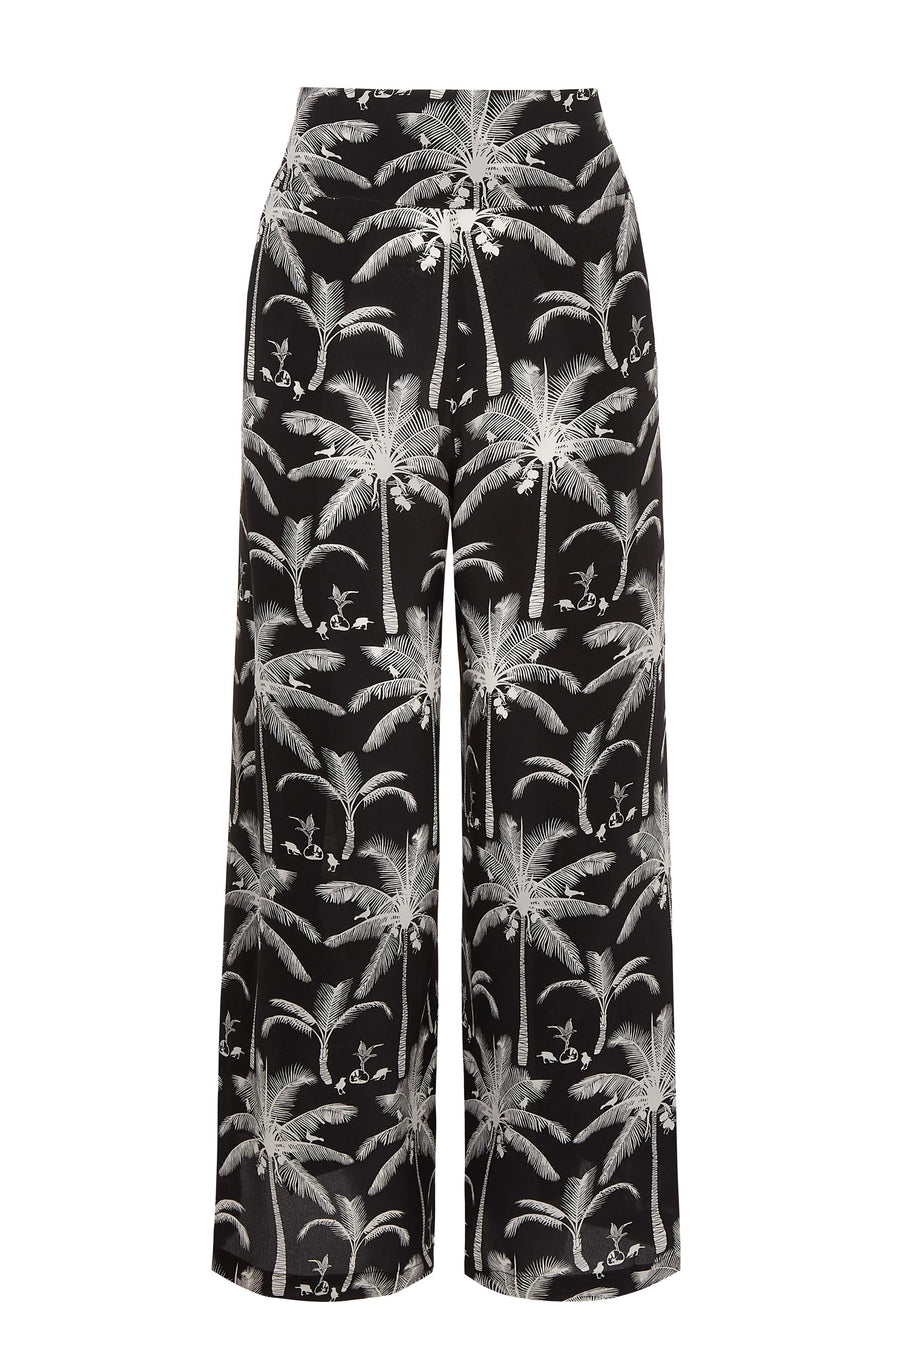 Wedding style silk Gabija pants black and white plantation palm print by Lotty B 